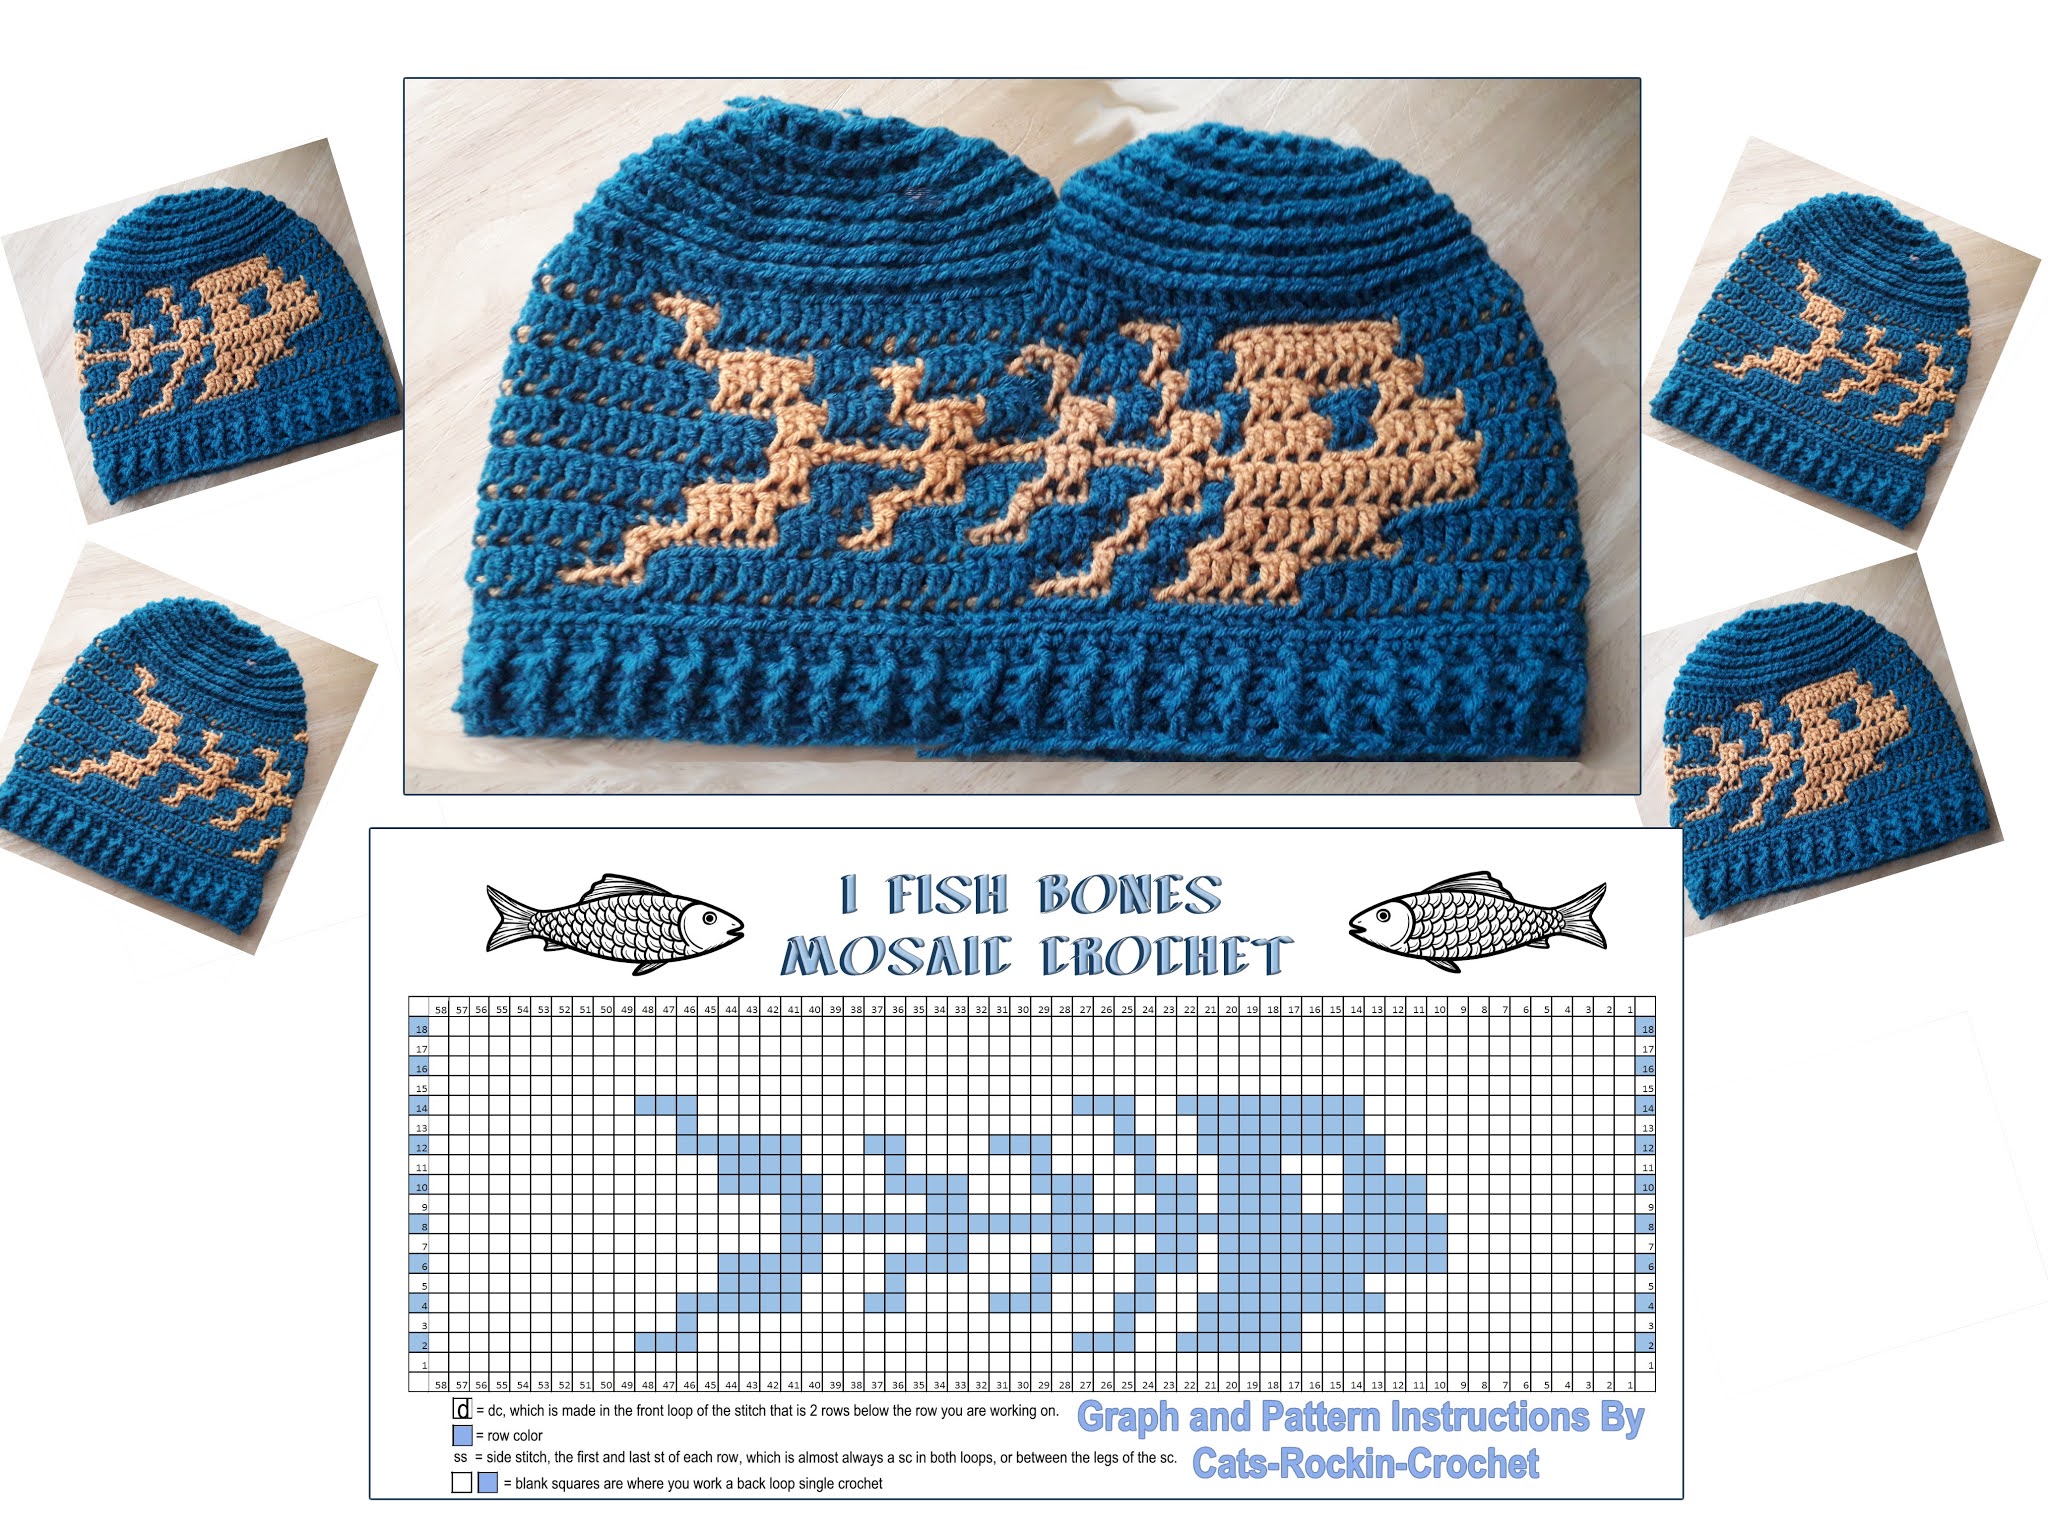 Cats-Rockin-Crochet Free Crochet and Knit Patterns : The I Fish Bones  Beanie